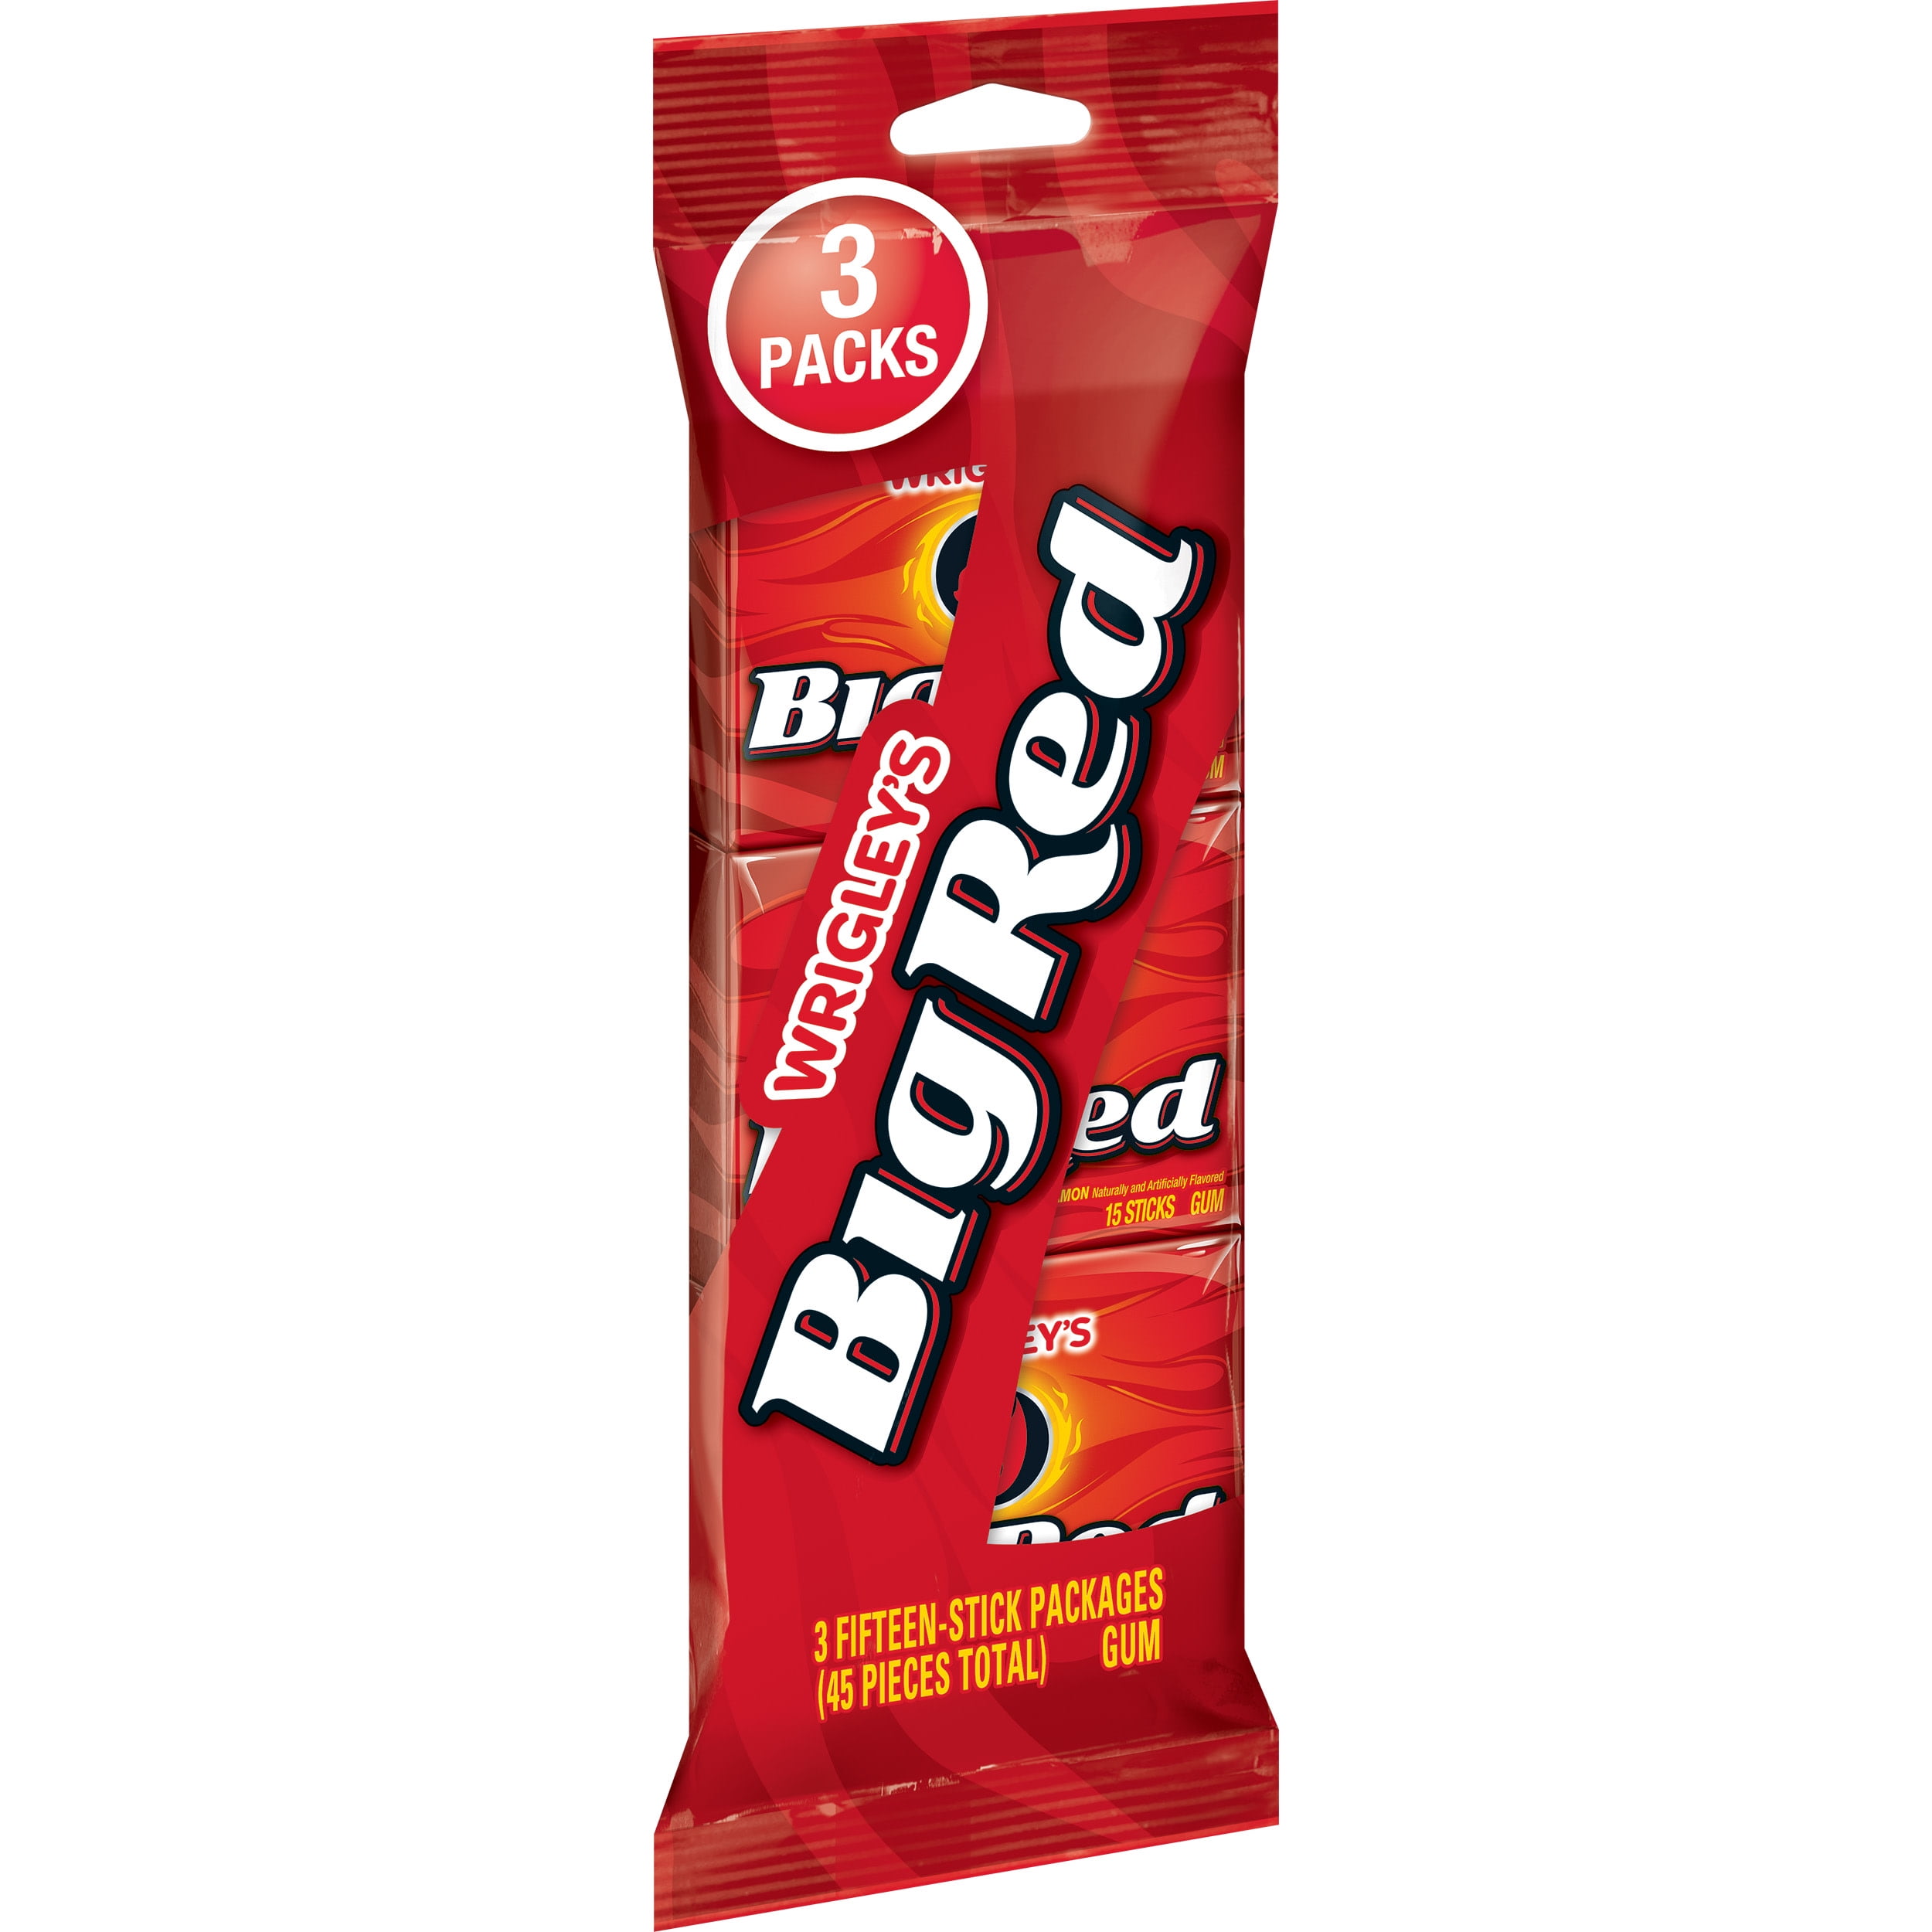 Big Red Slim Pack Gum